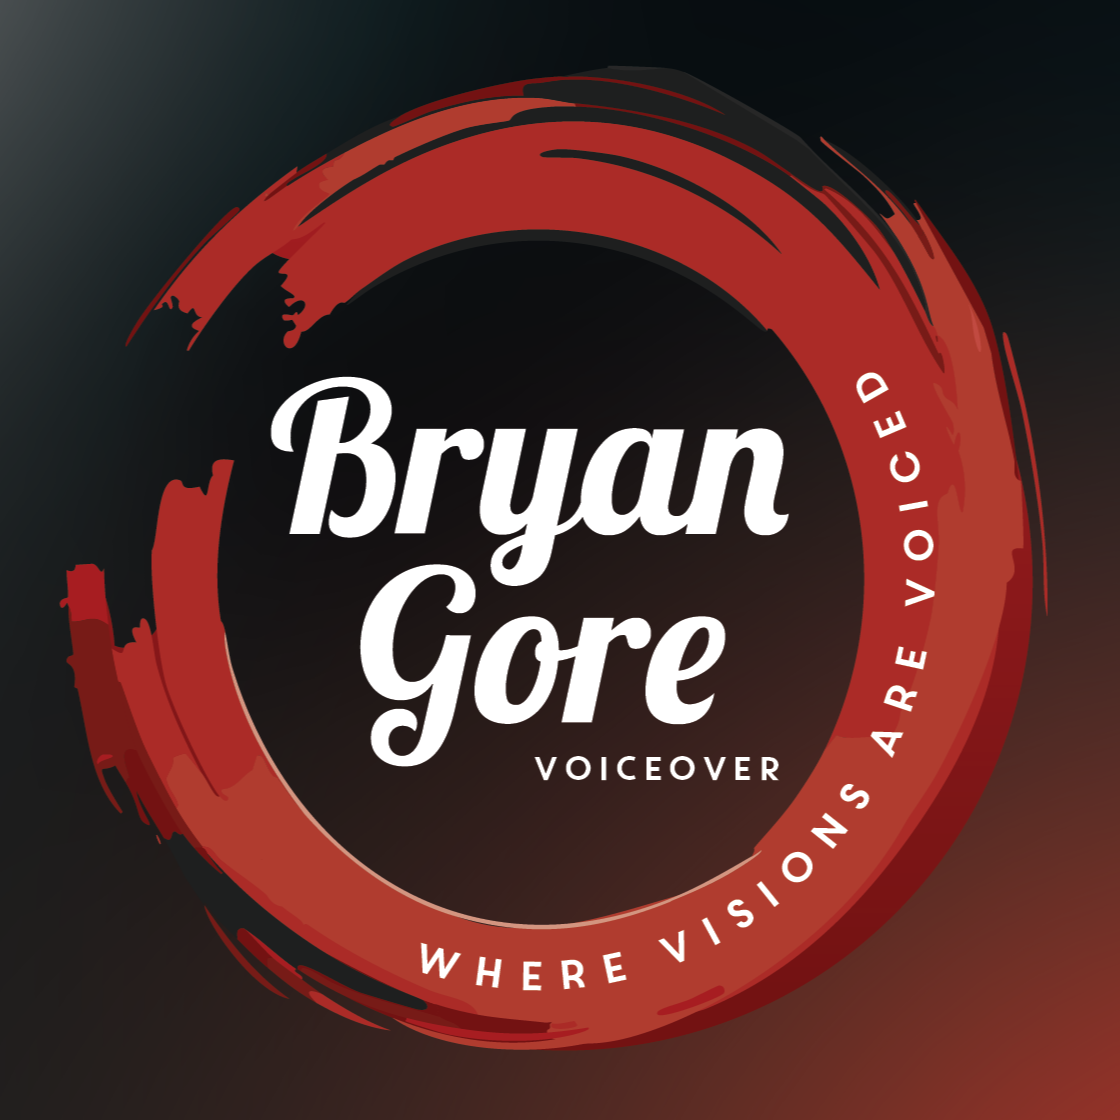 Bryan Gore